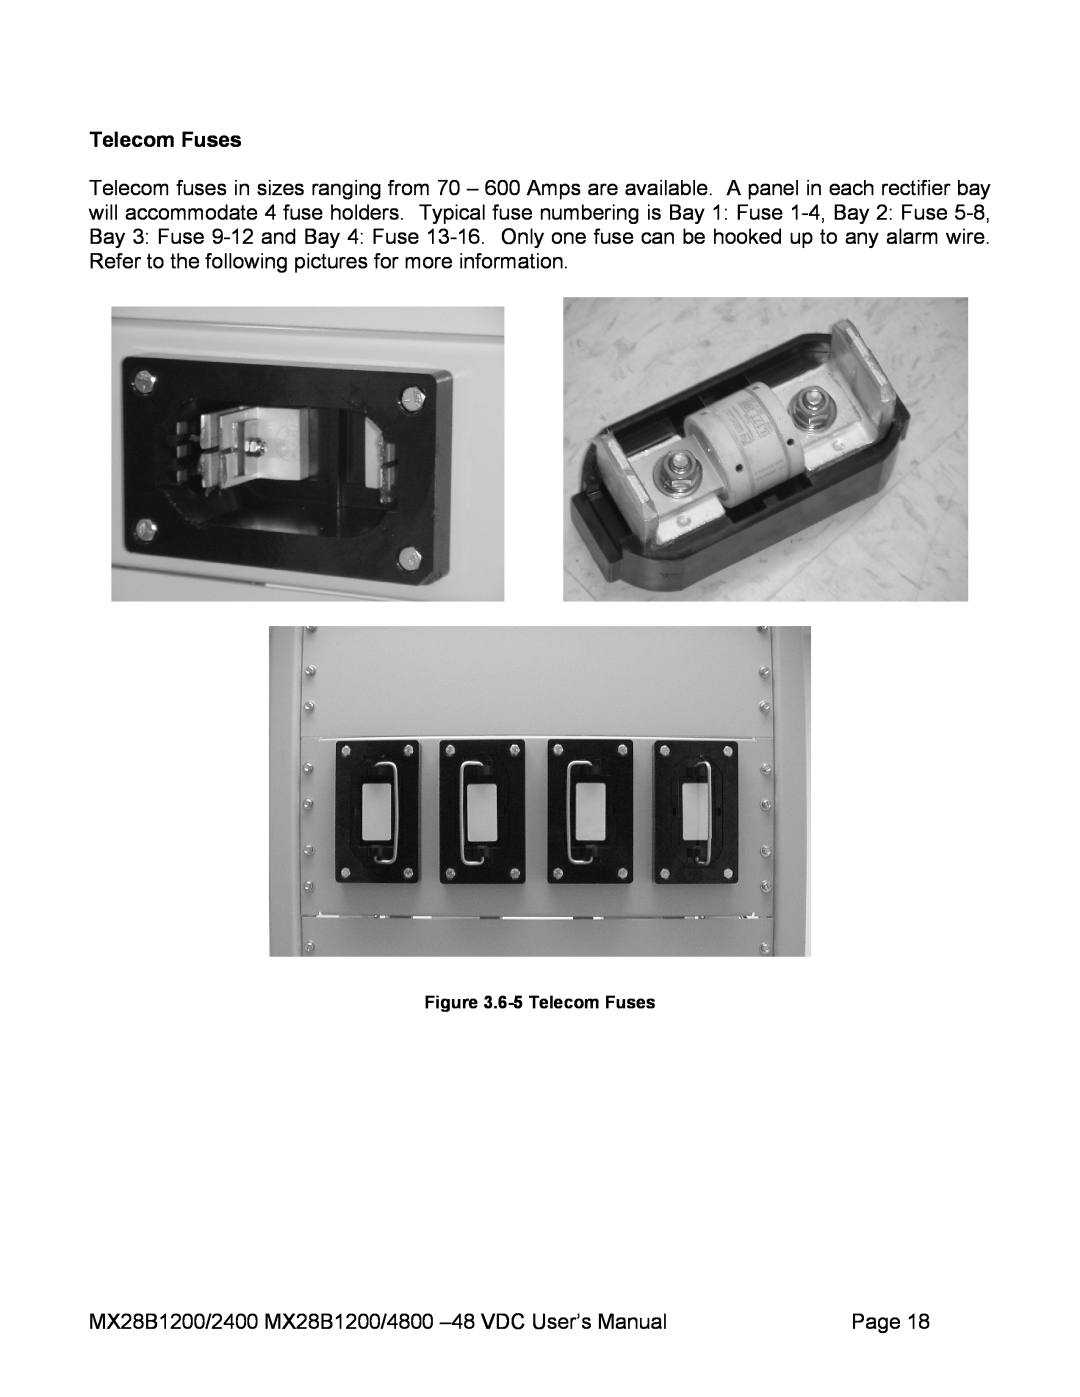 American Power Conversion MX28B2400, MX28B4800 manual 6-5 Telecom Fuses 